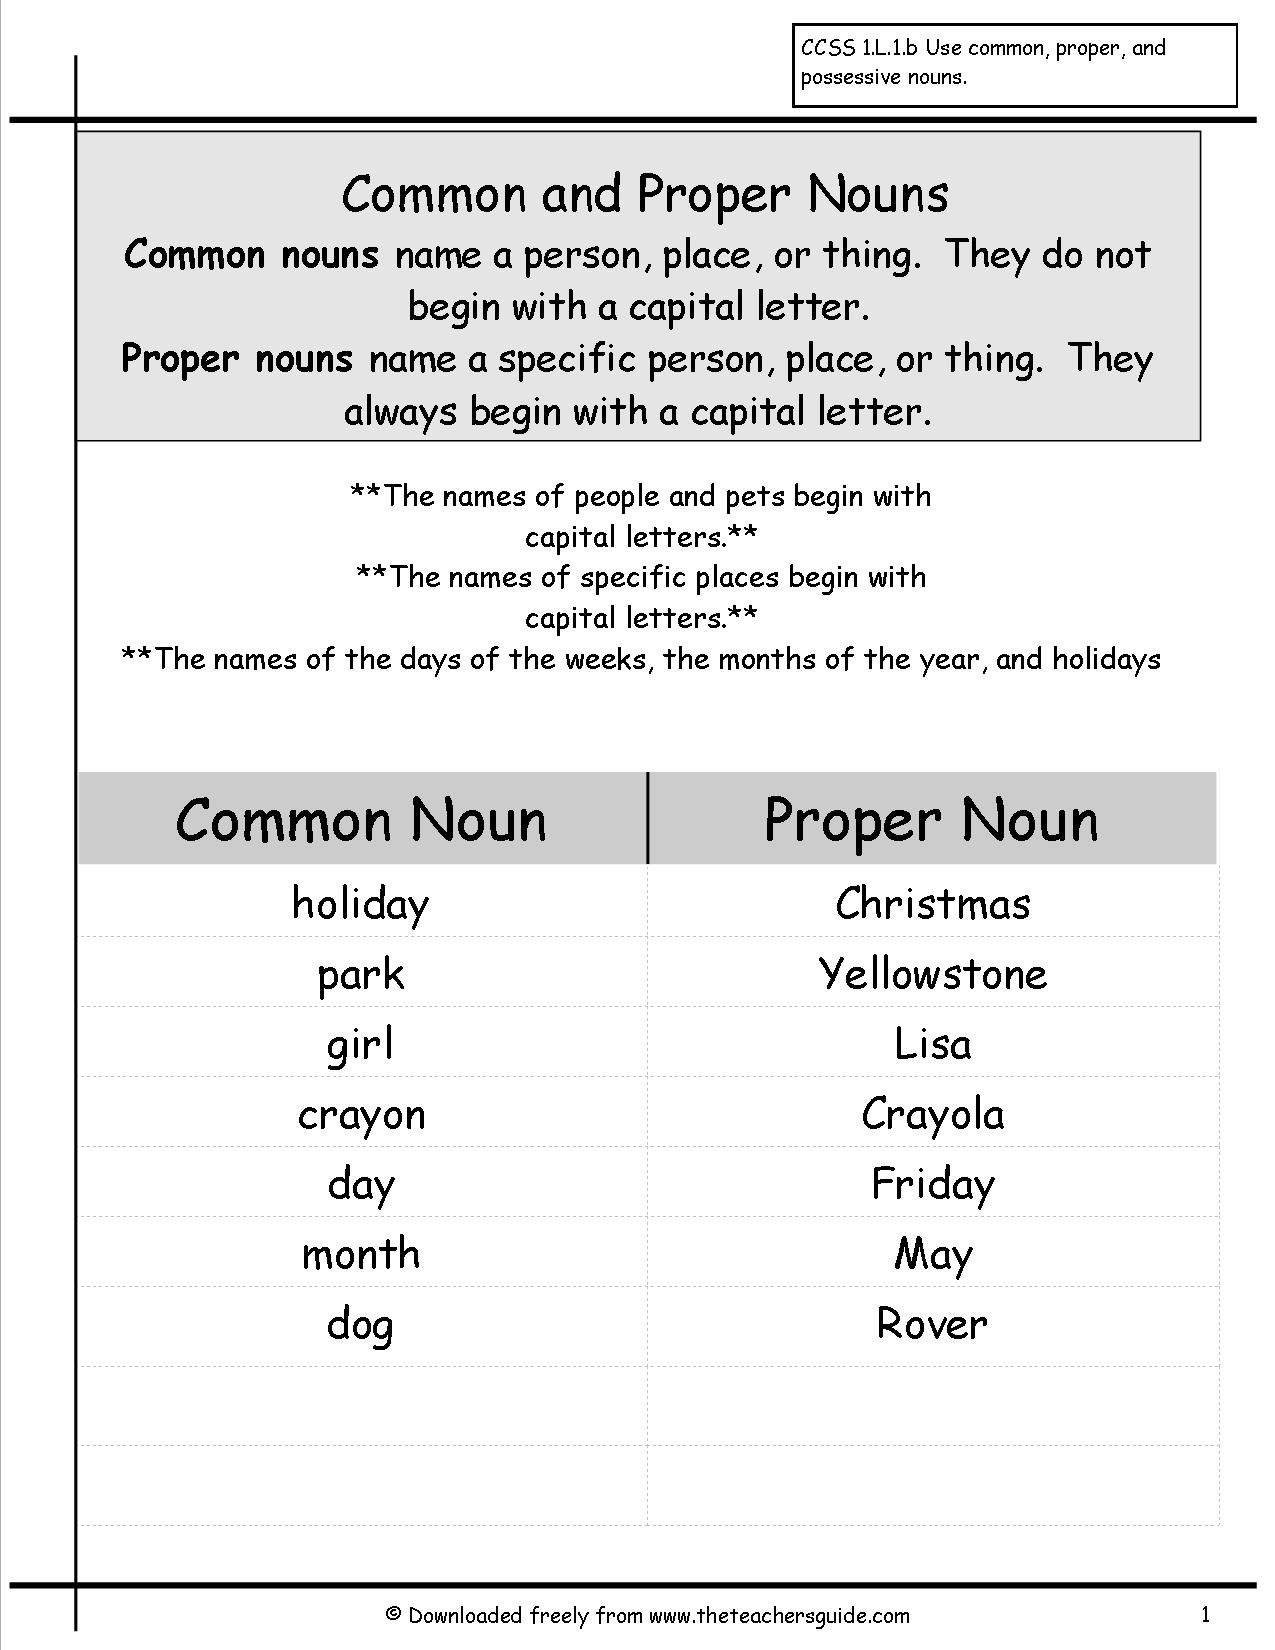 Common Noun Proper Noun Worksheet Image